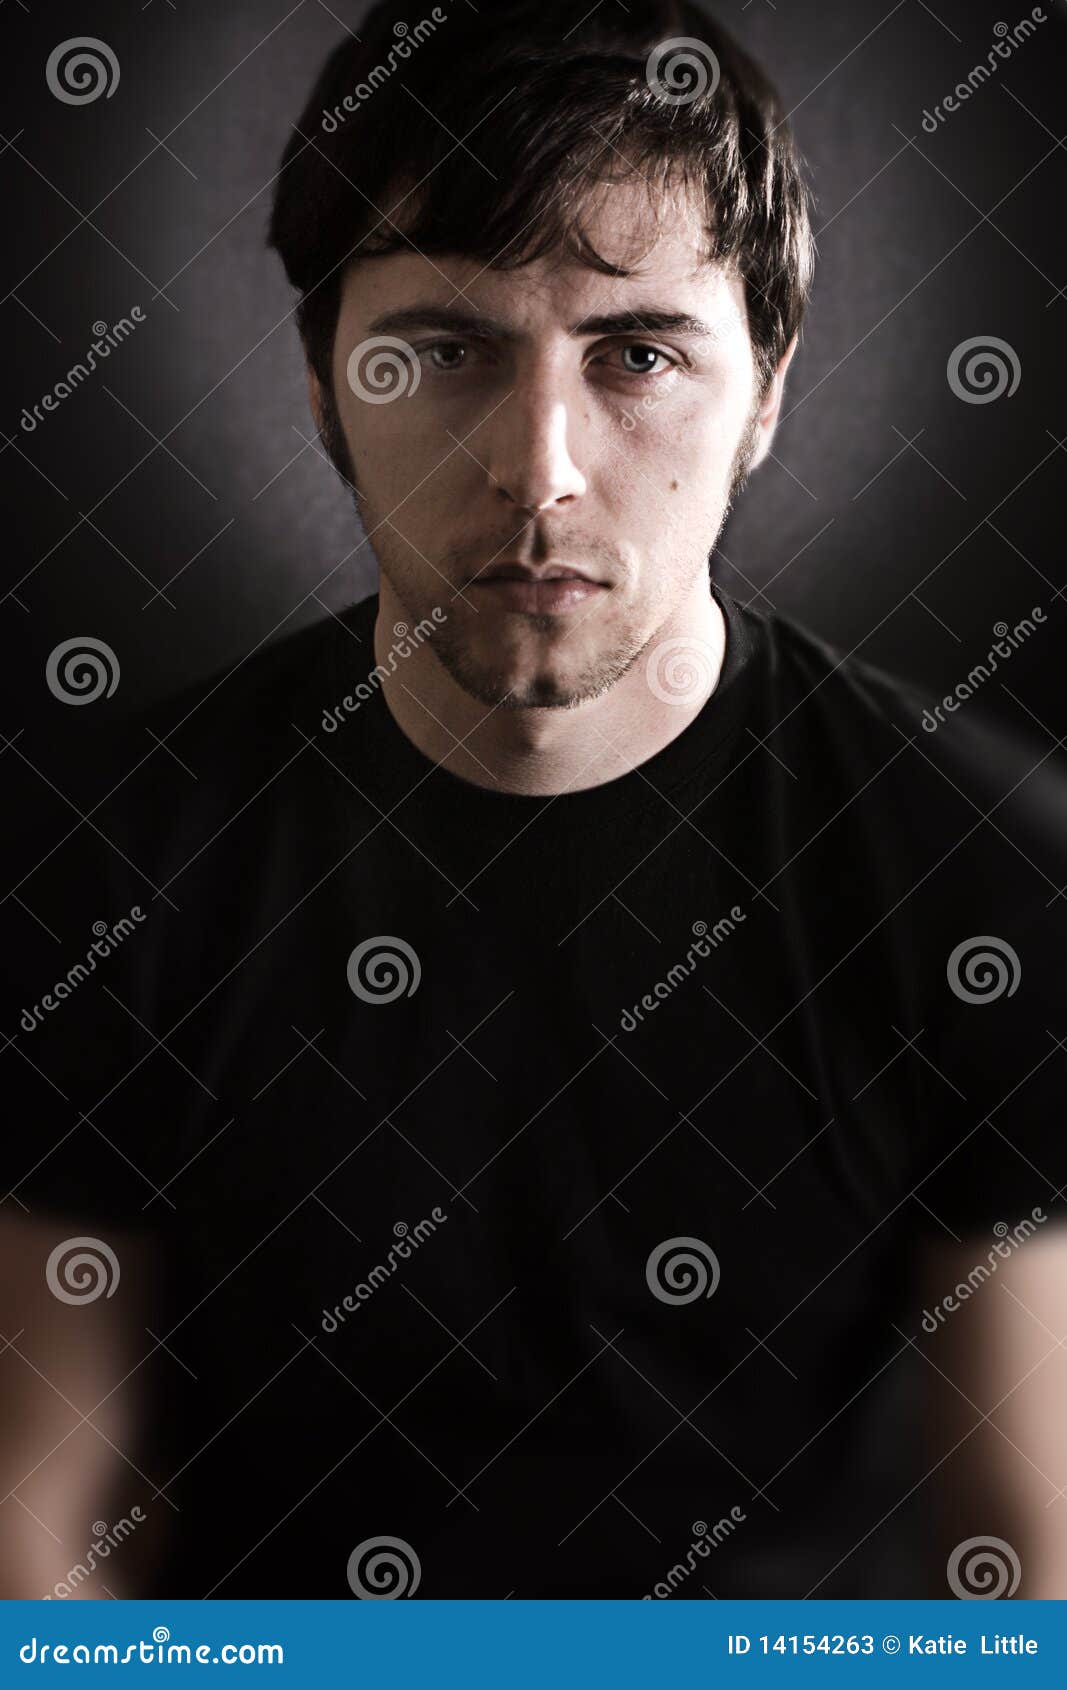 Moody Portrait stock image. Image of looking, black, prepared - 14154263